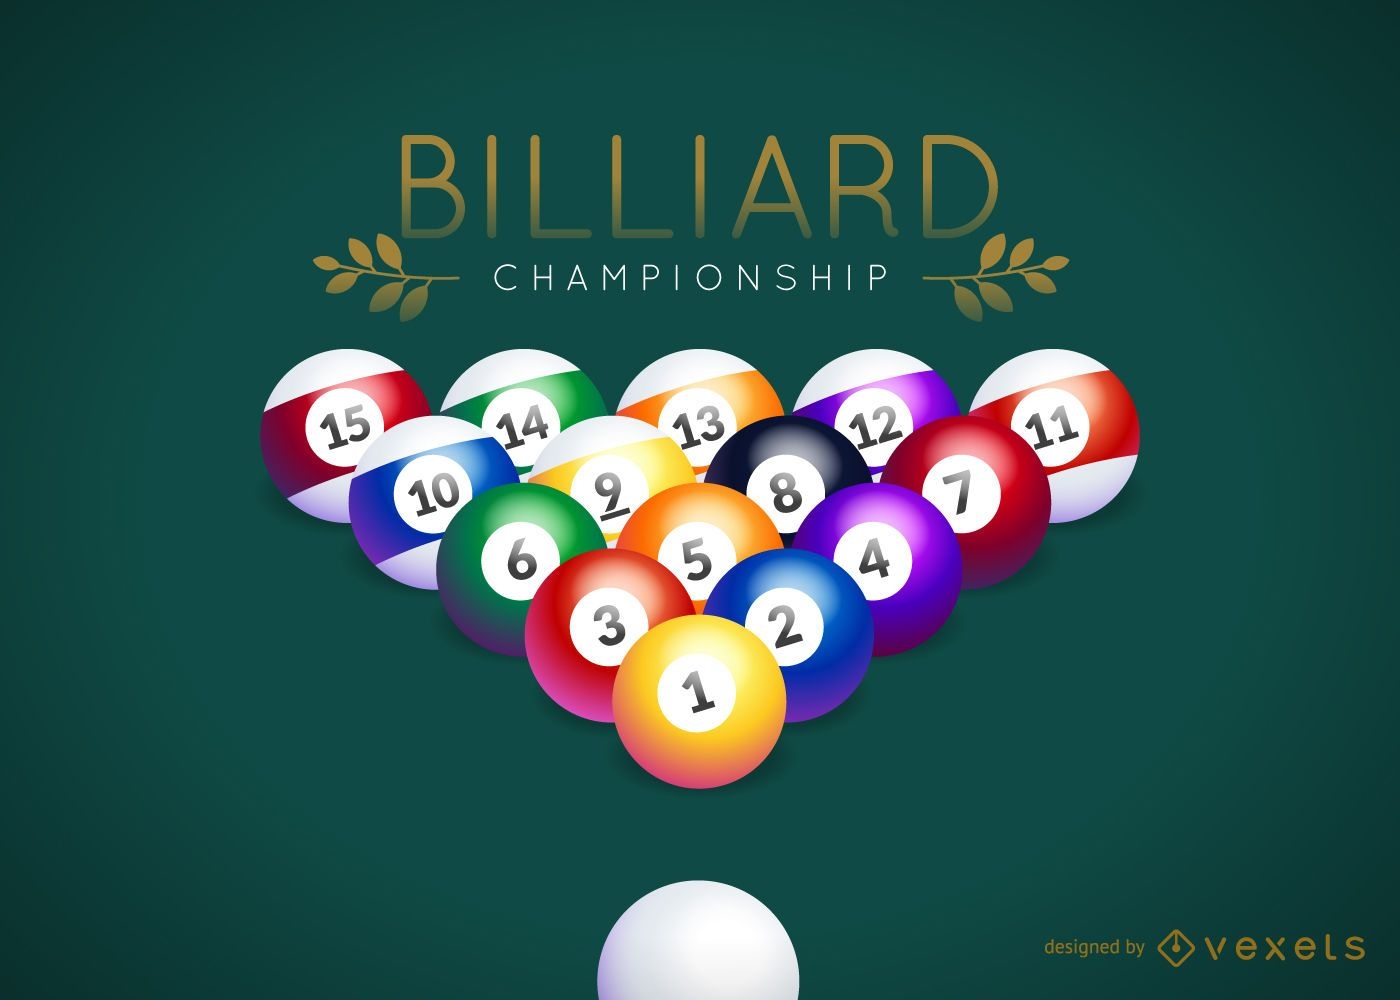 Billiard championship logo